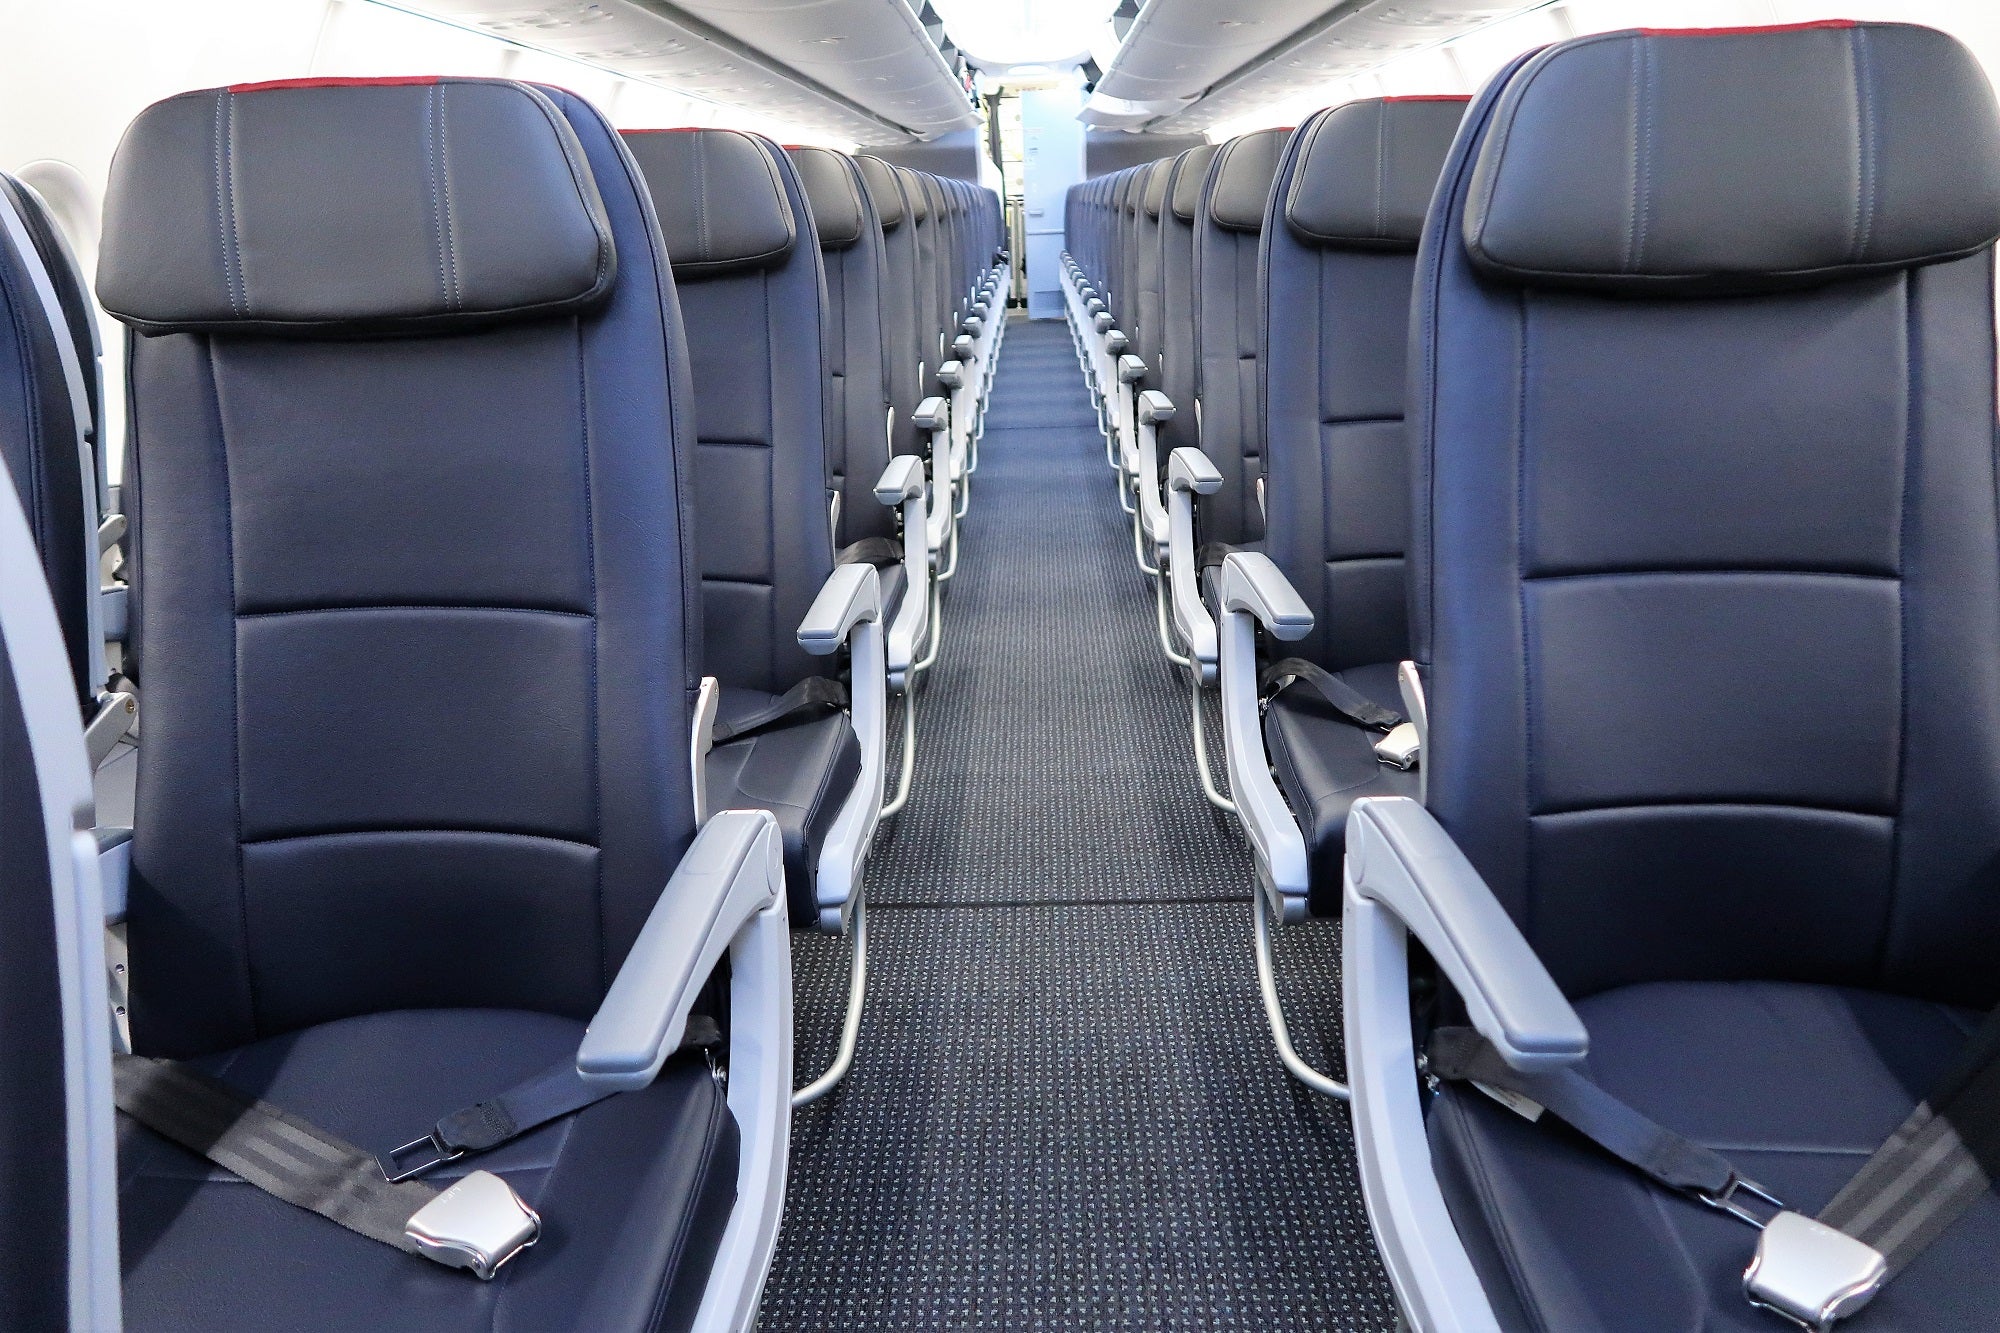 AA 737MAX aisle seats